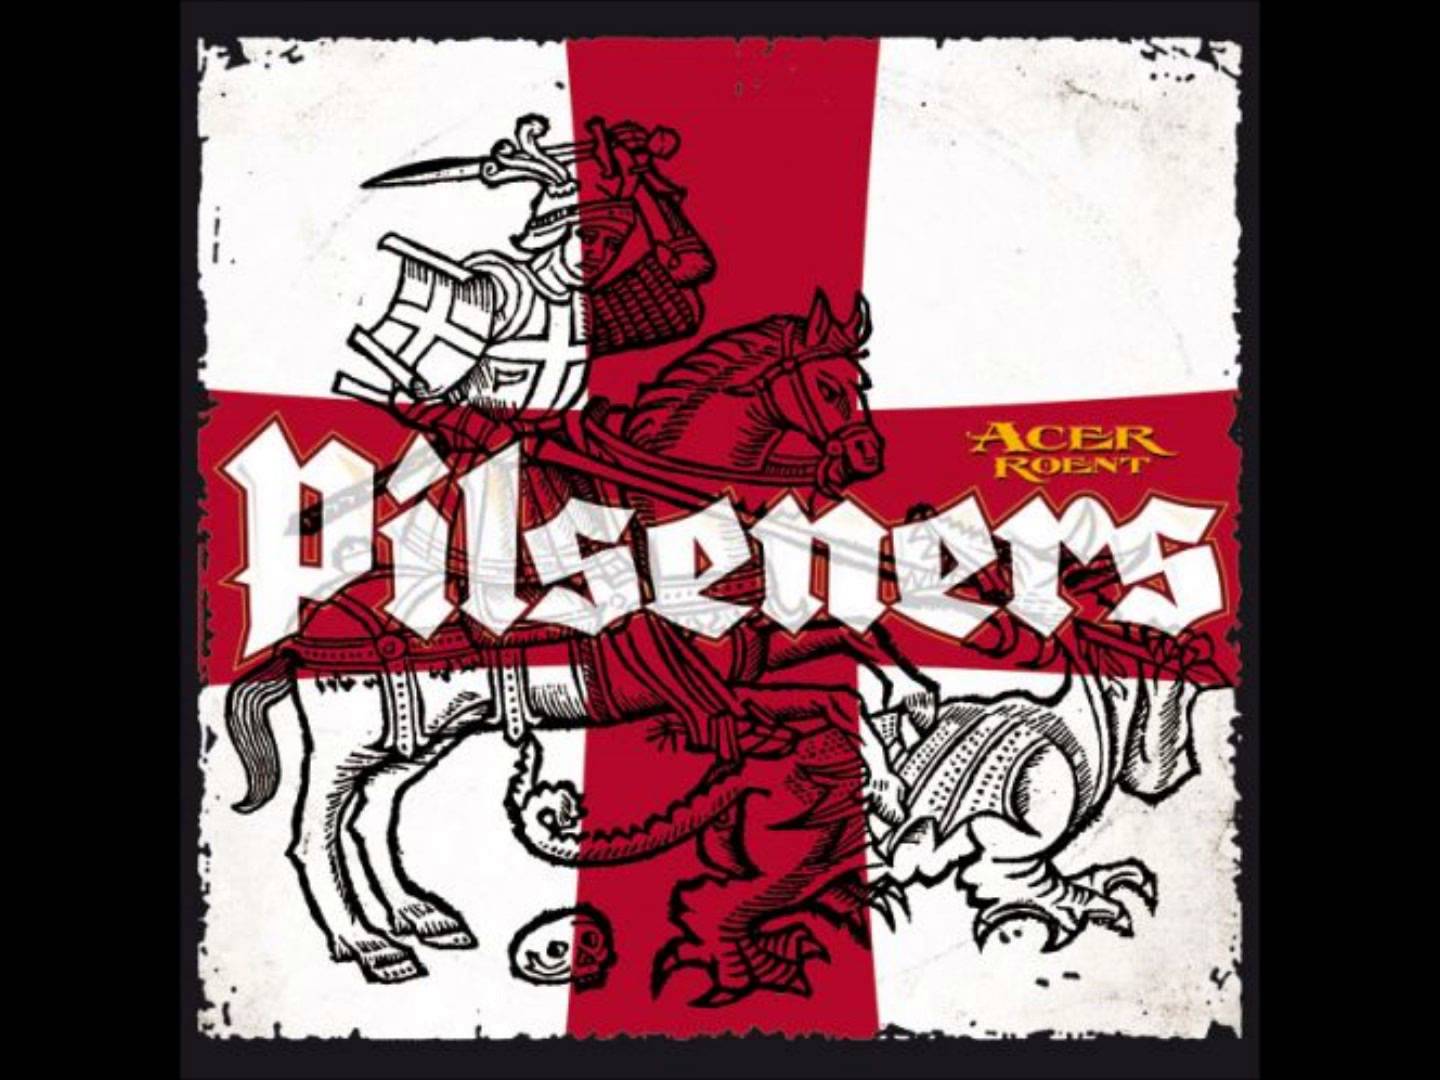 PILSENERS "Acer roent" - LP